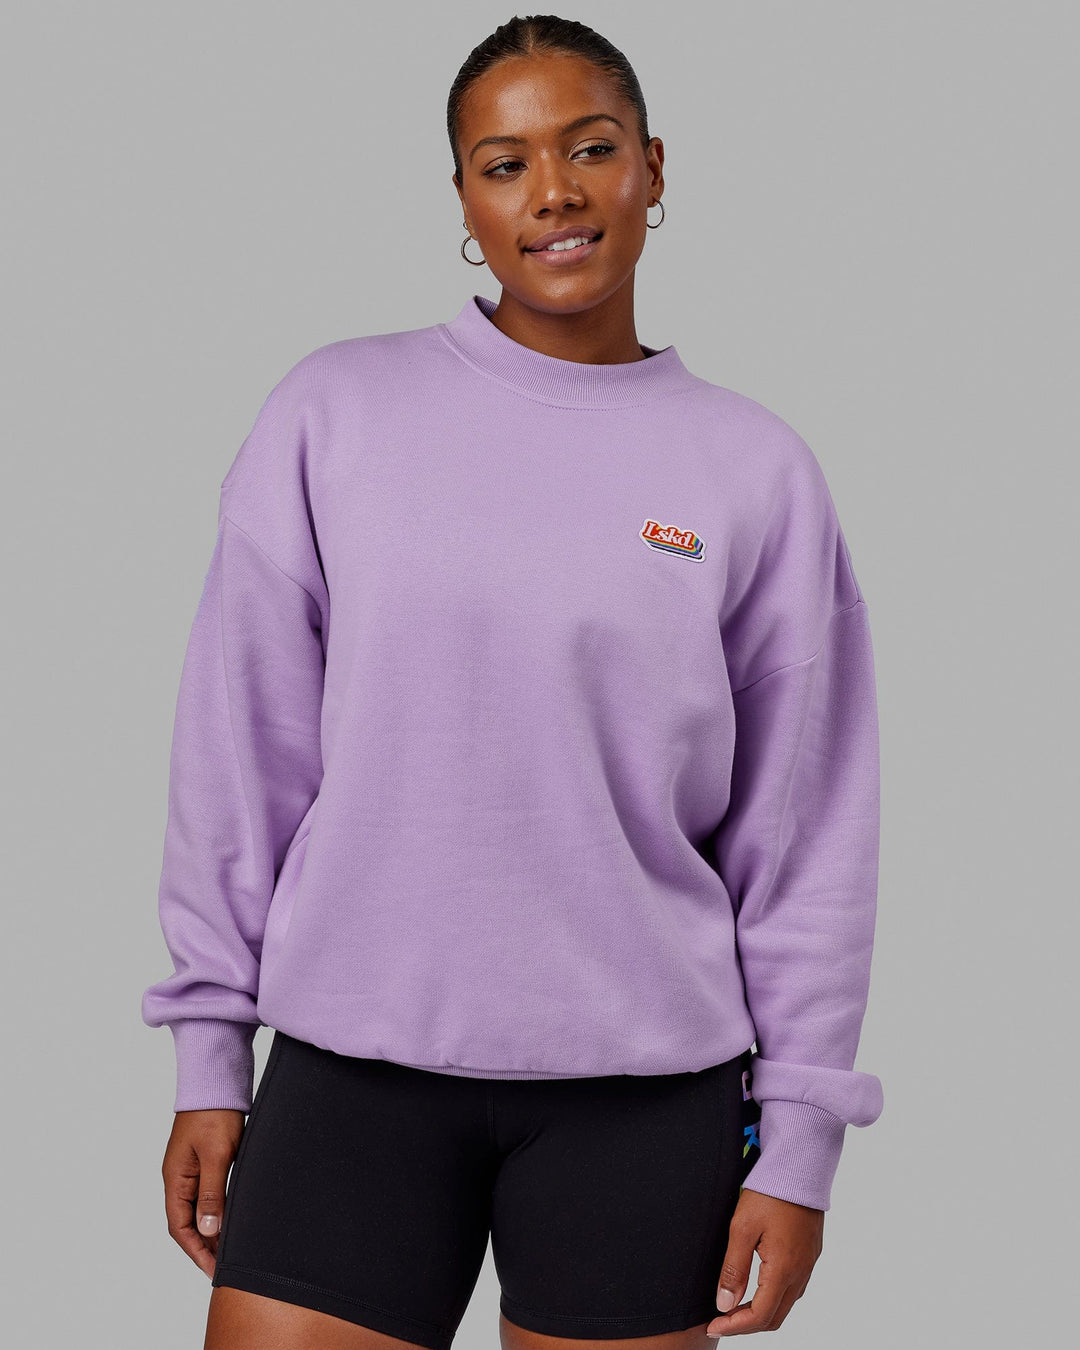 Woman wearing Unisex Radiate Sweater Oversize - Pale Lilac